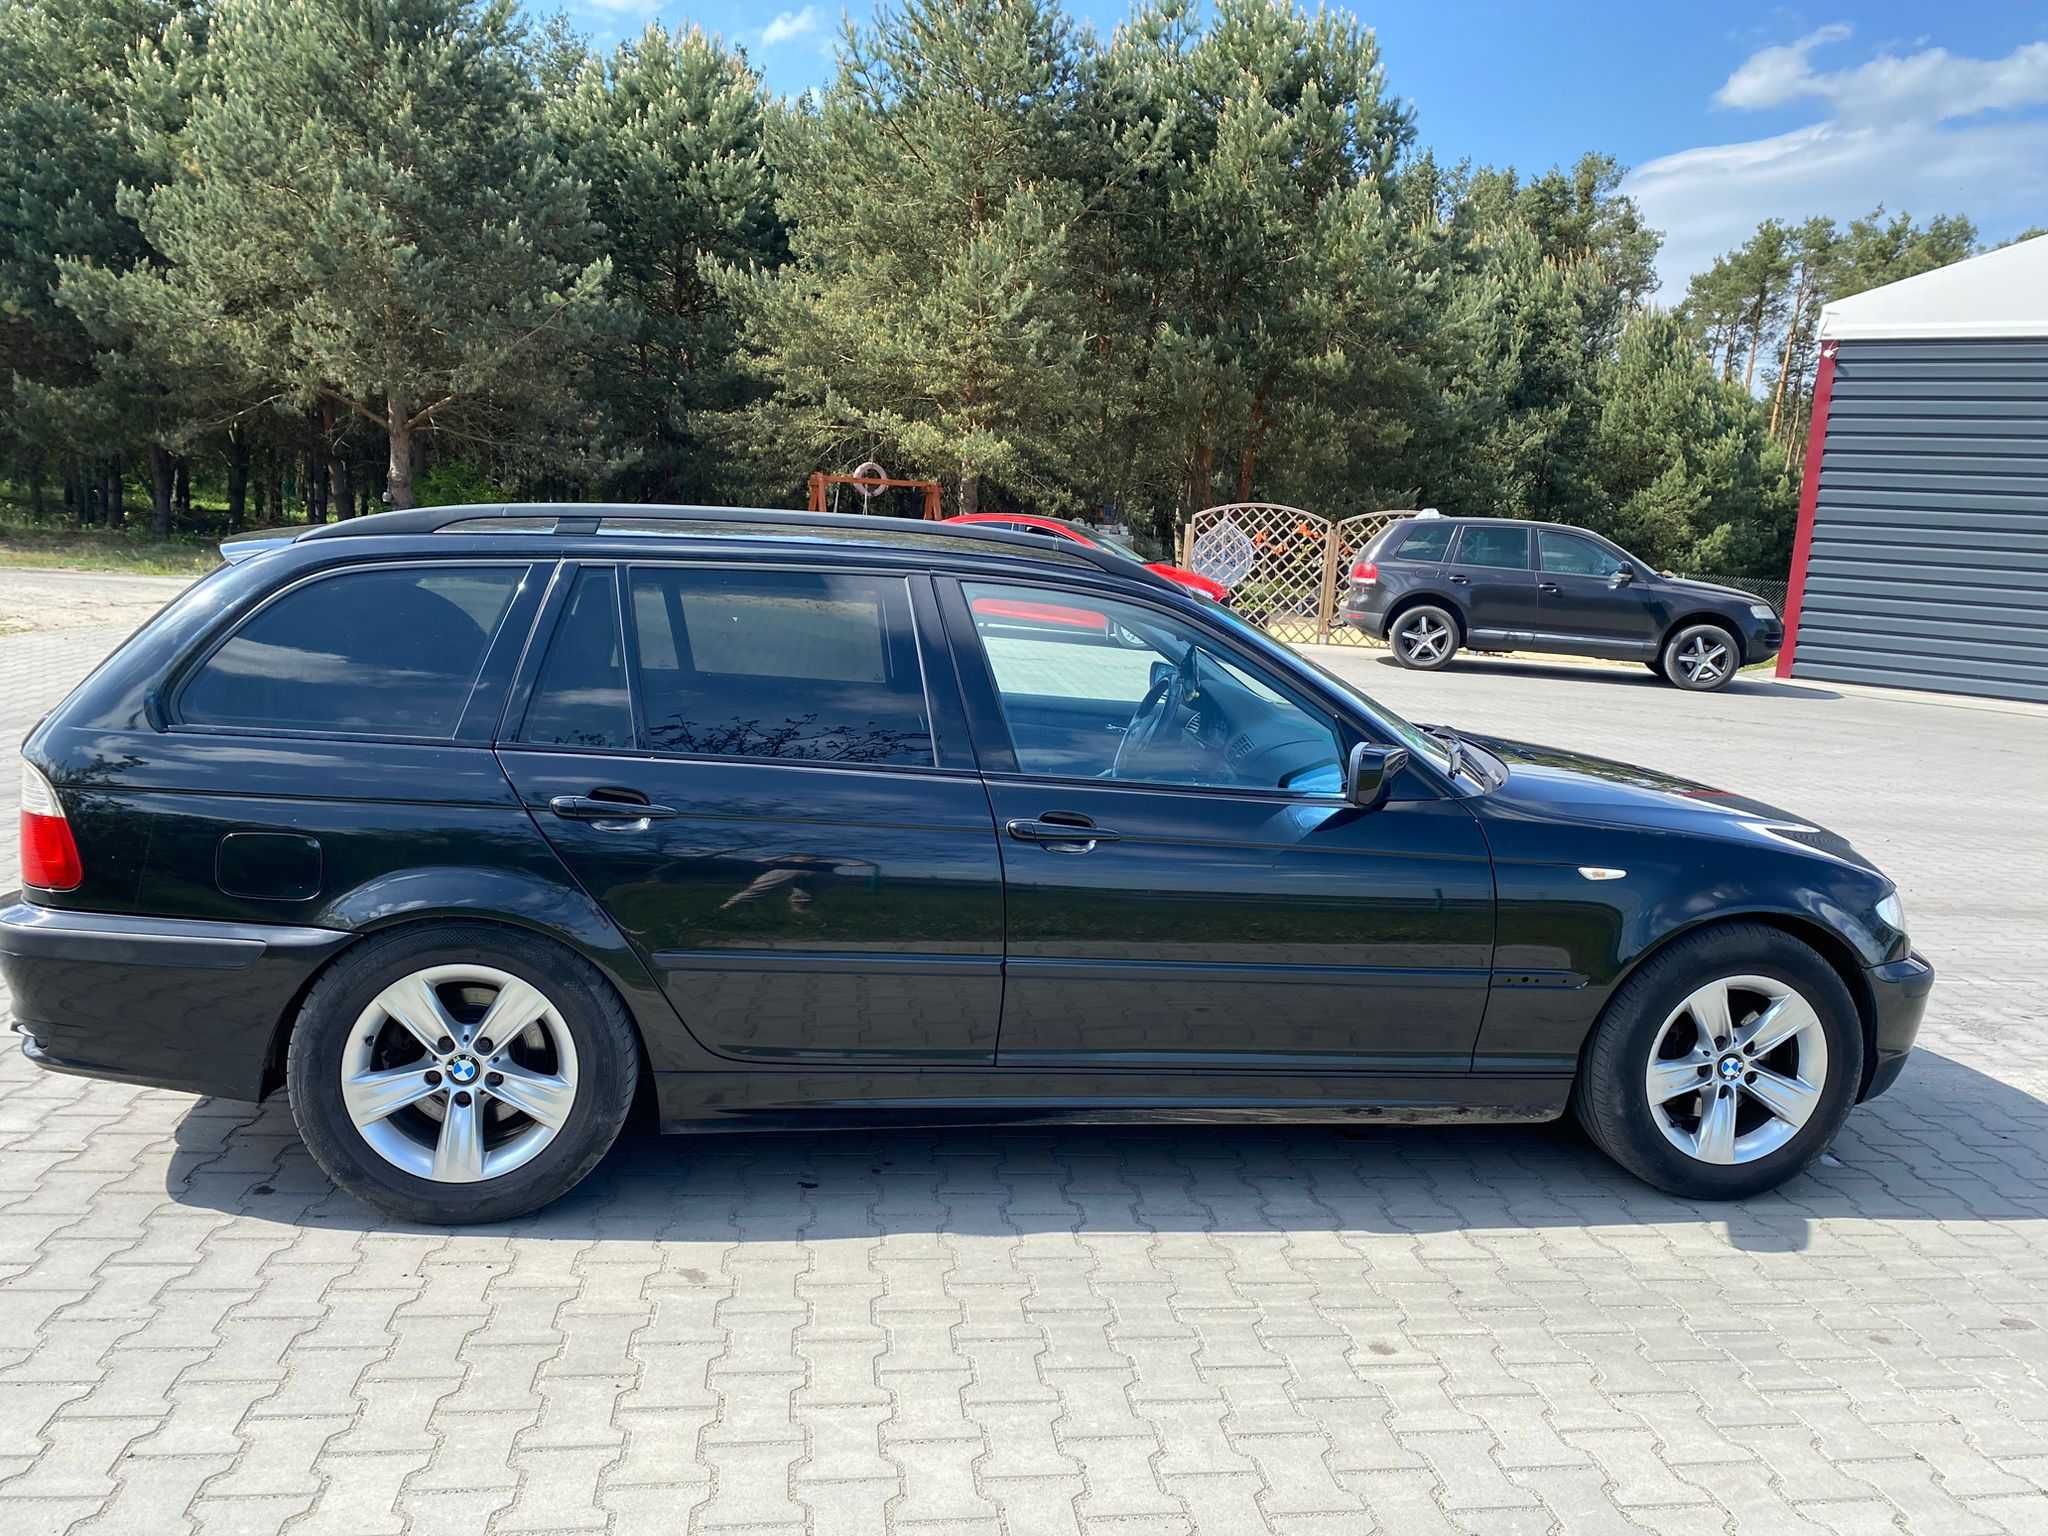 BMW E46 Touring 2002r. 2,2 benzyna